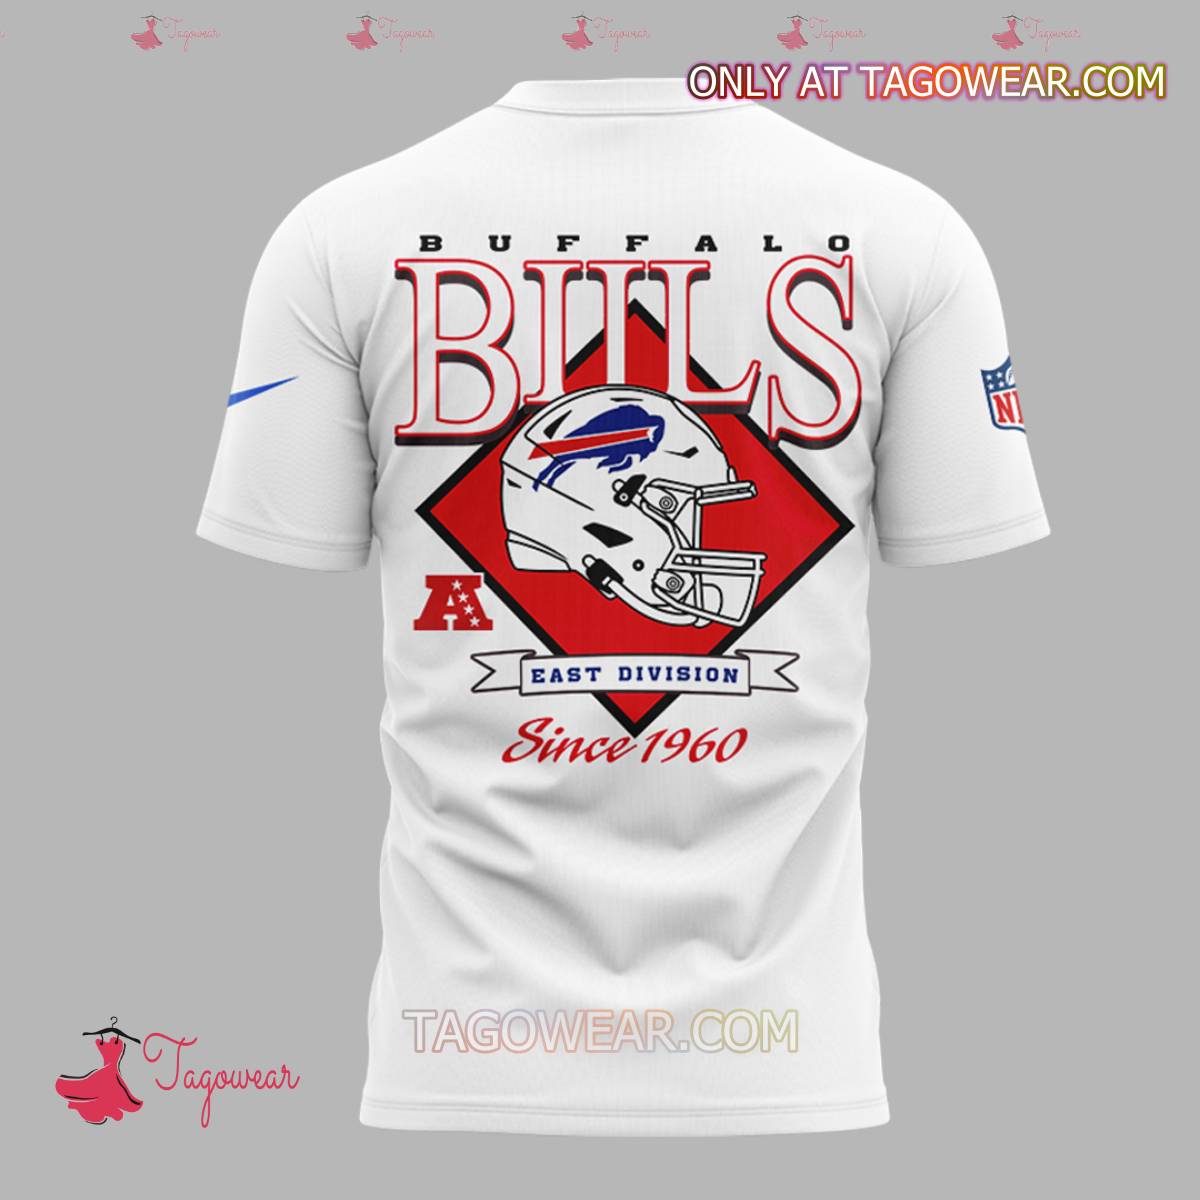 Buffalo Bills Bruce Smith East Division Since 1960 Shirt b